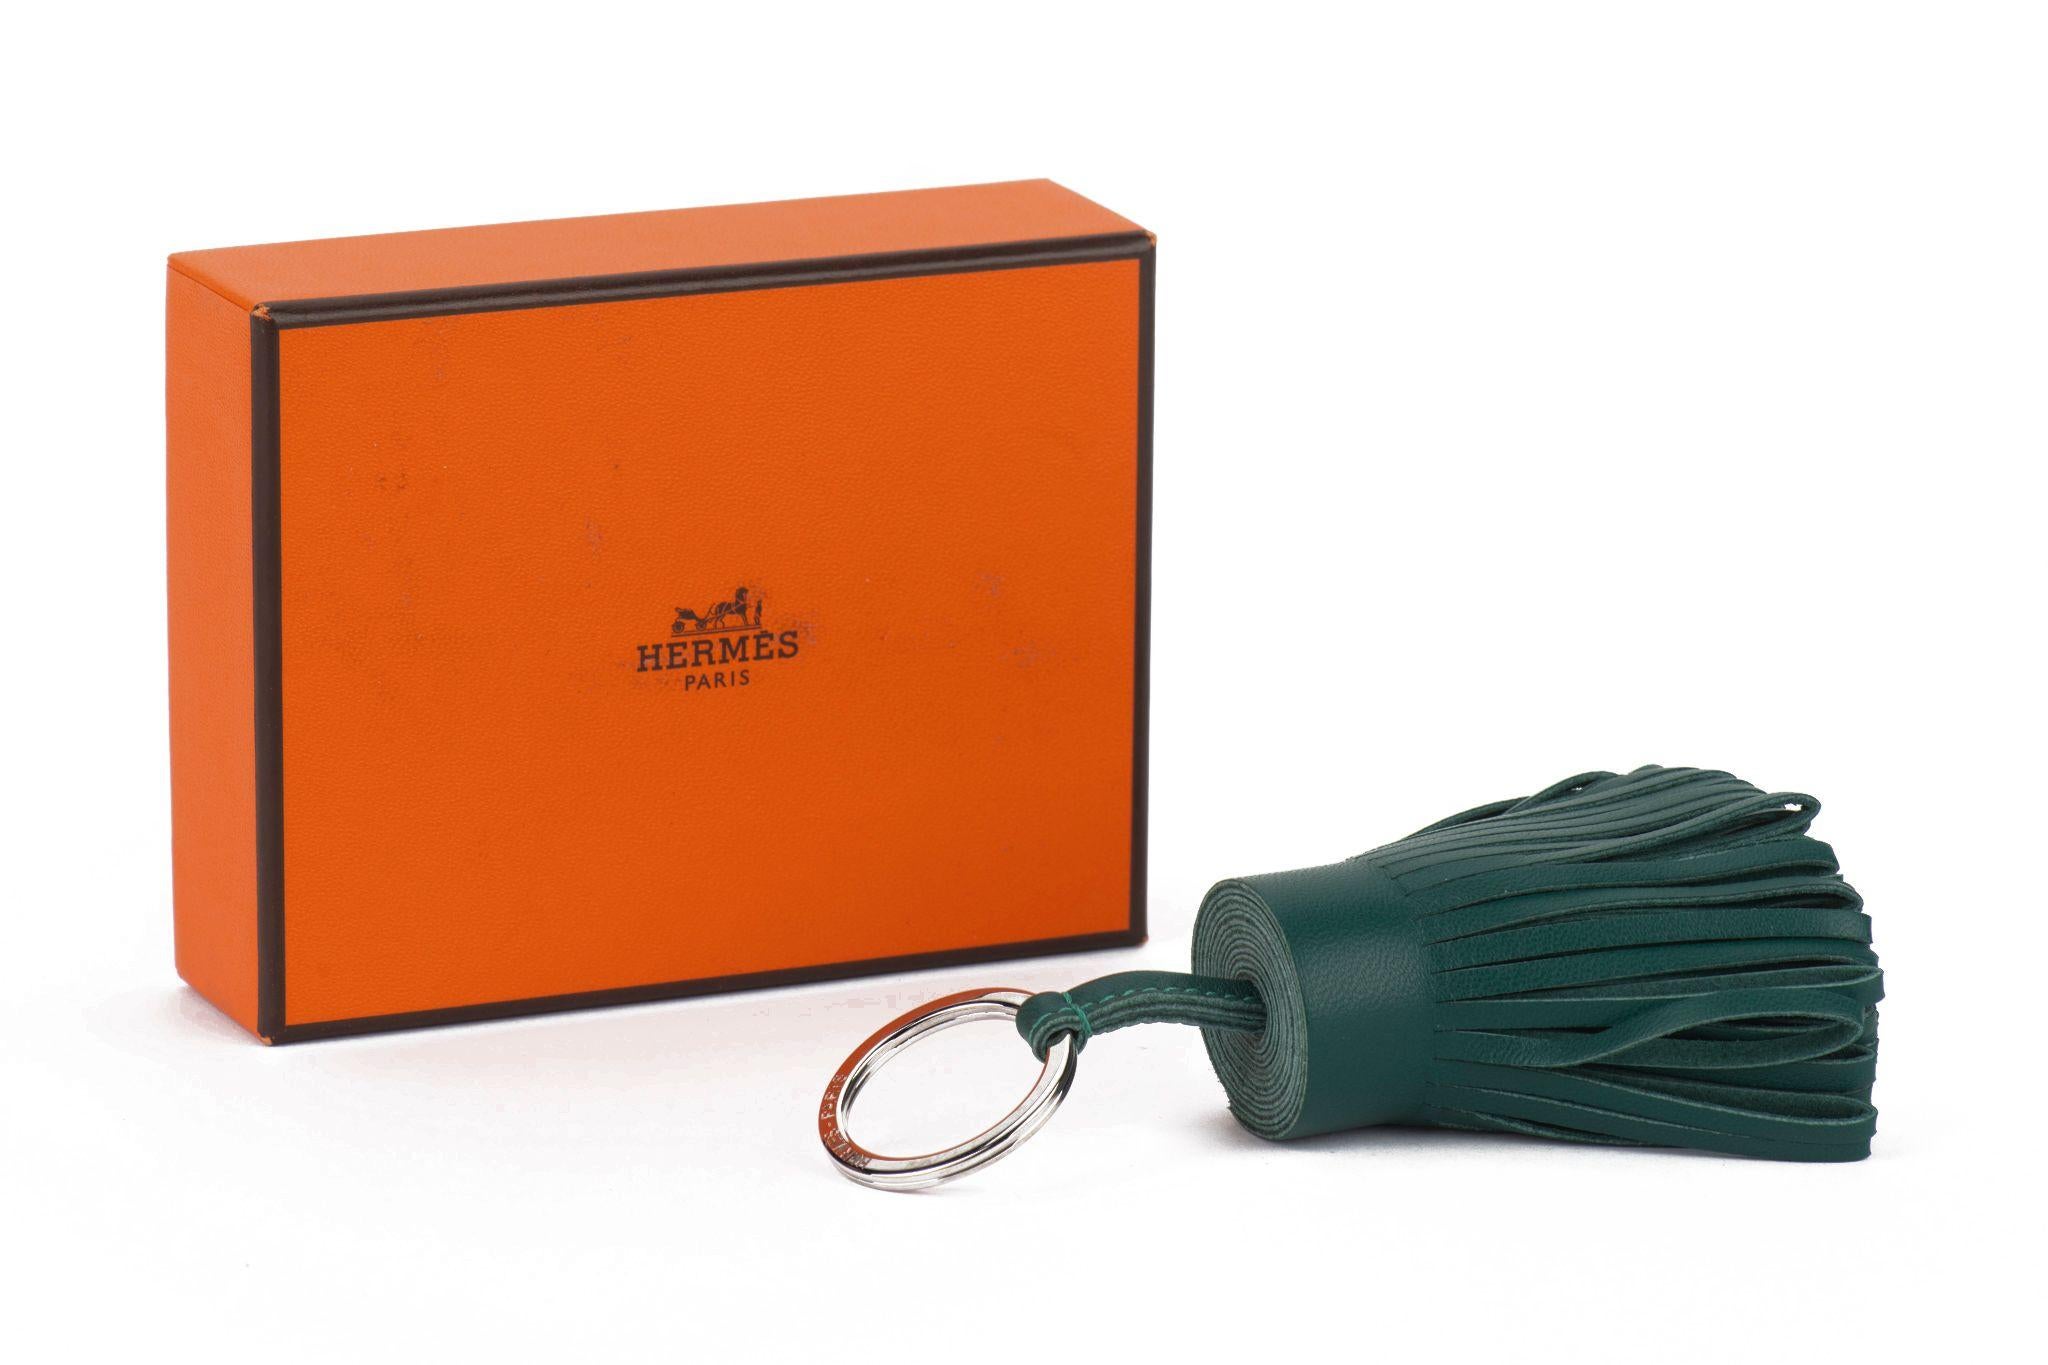 Hermès vert cypress lambskin leather Carmen tassel keychain. Brand new with original box in unused condition.